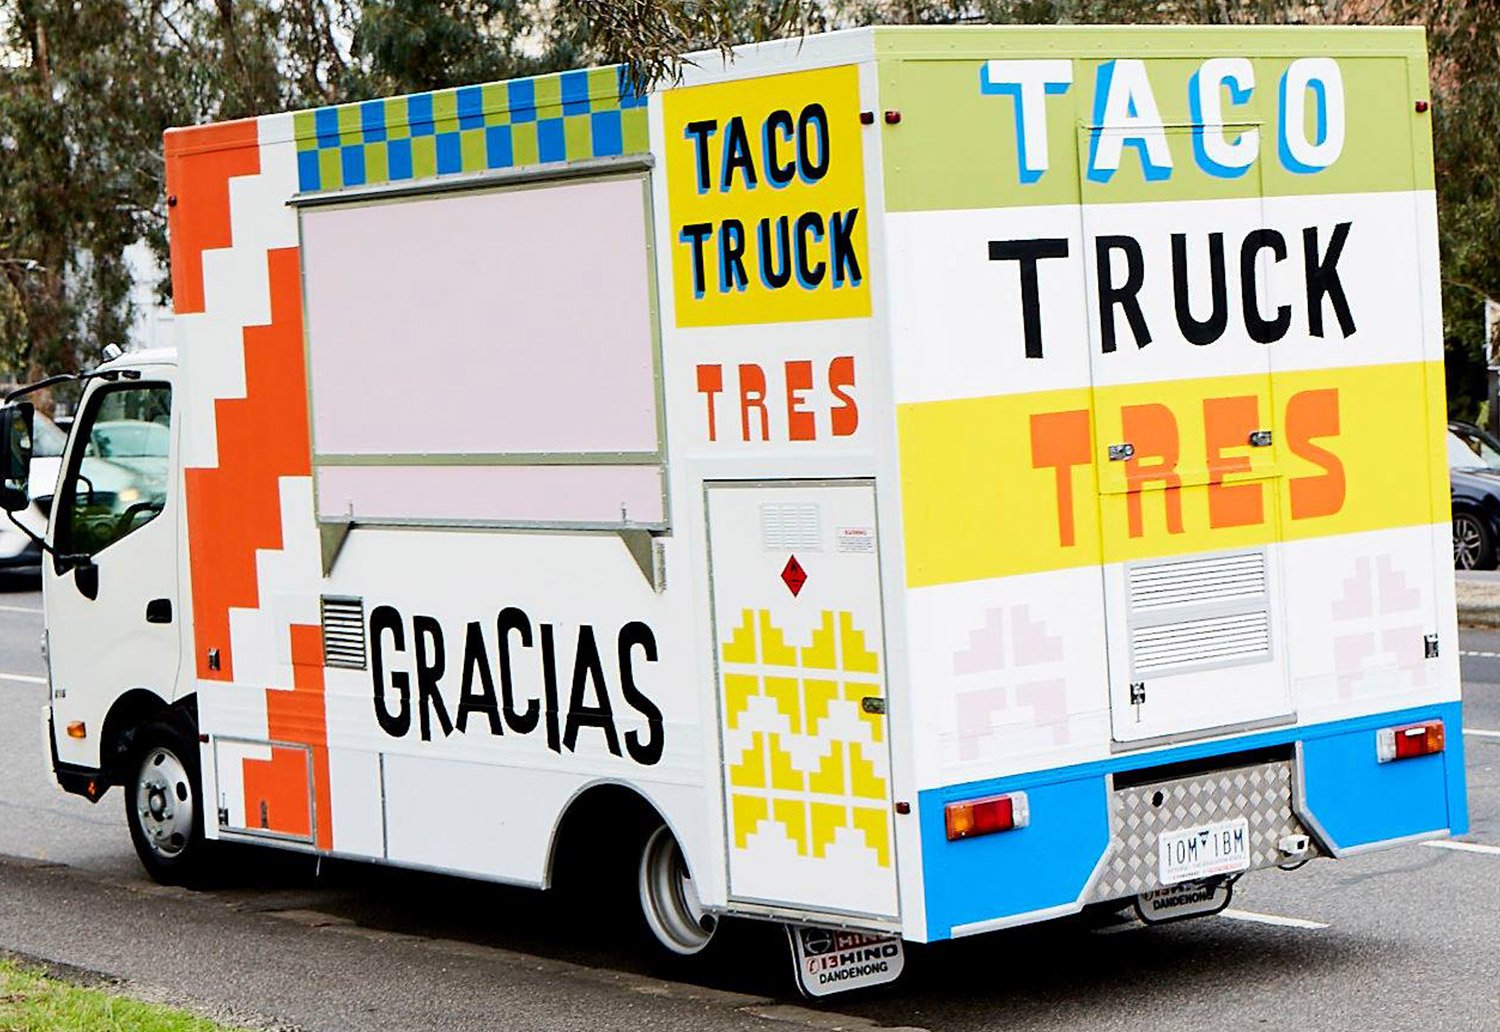 Taco Truck image